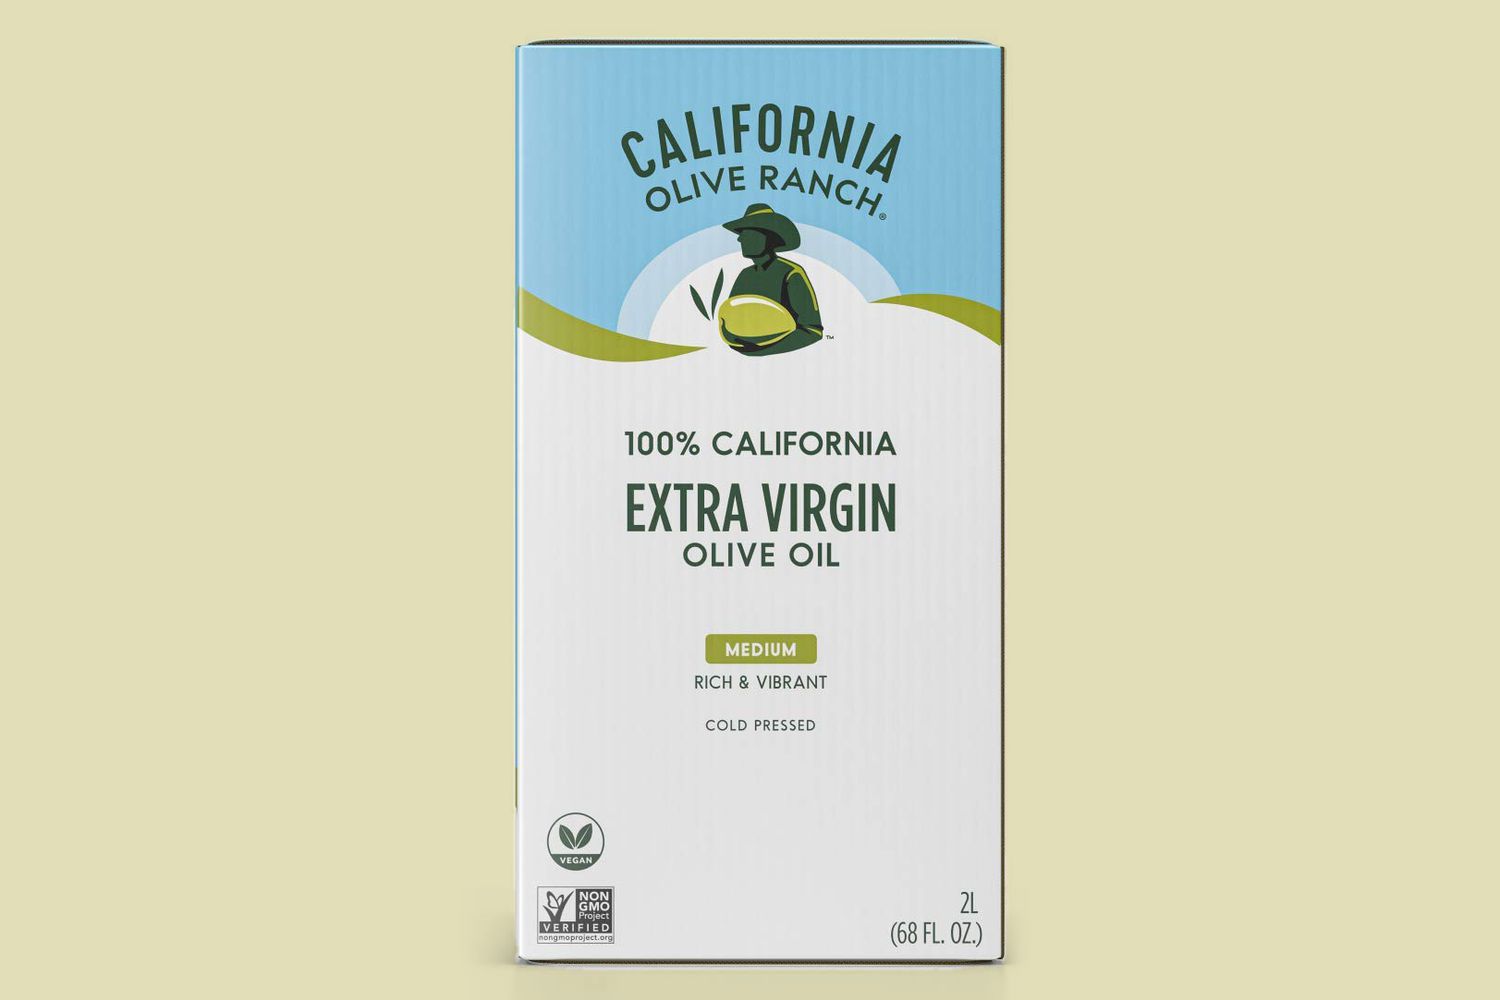 California Olive Ranch 100% California Bag in a Box